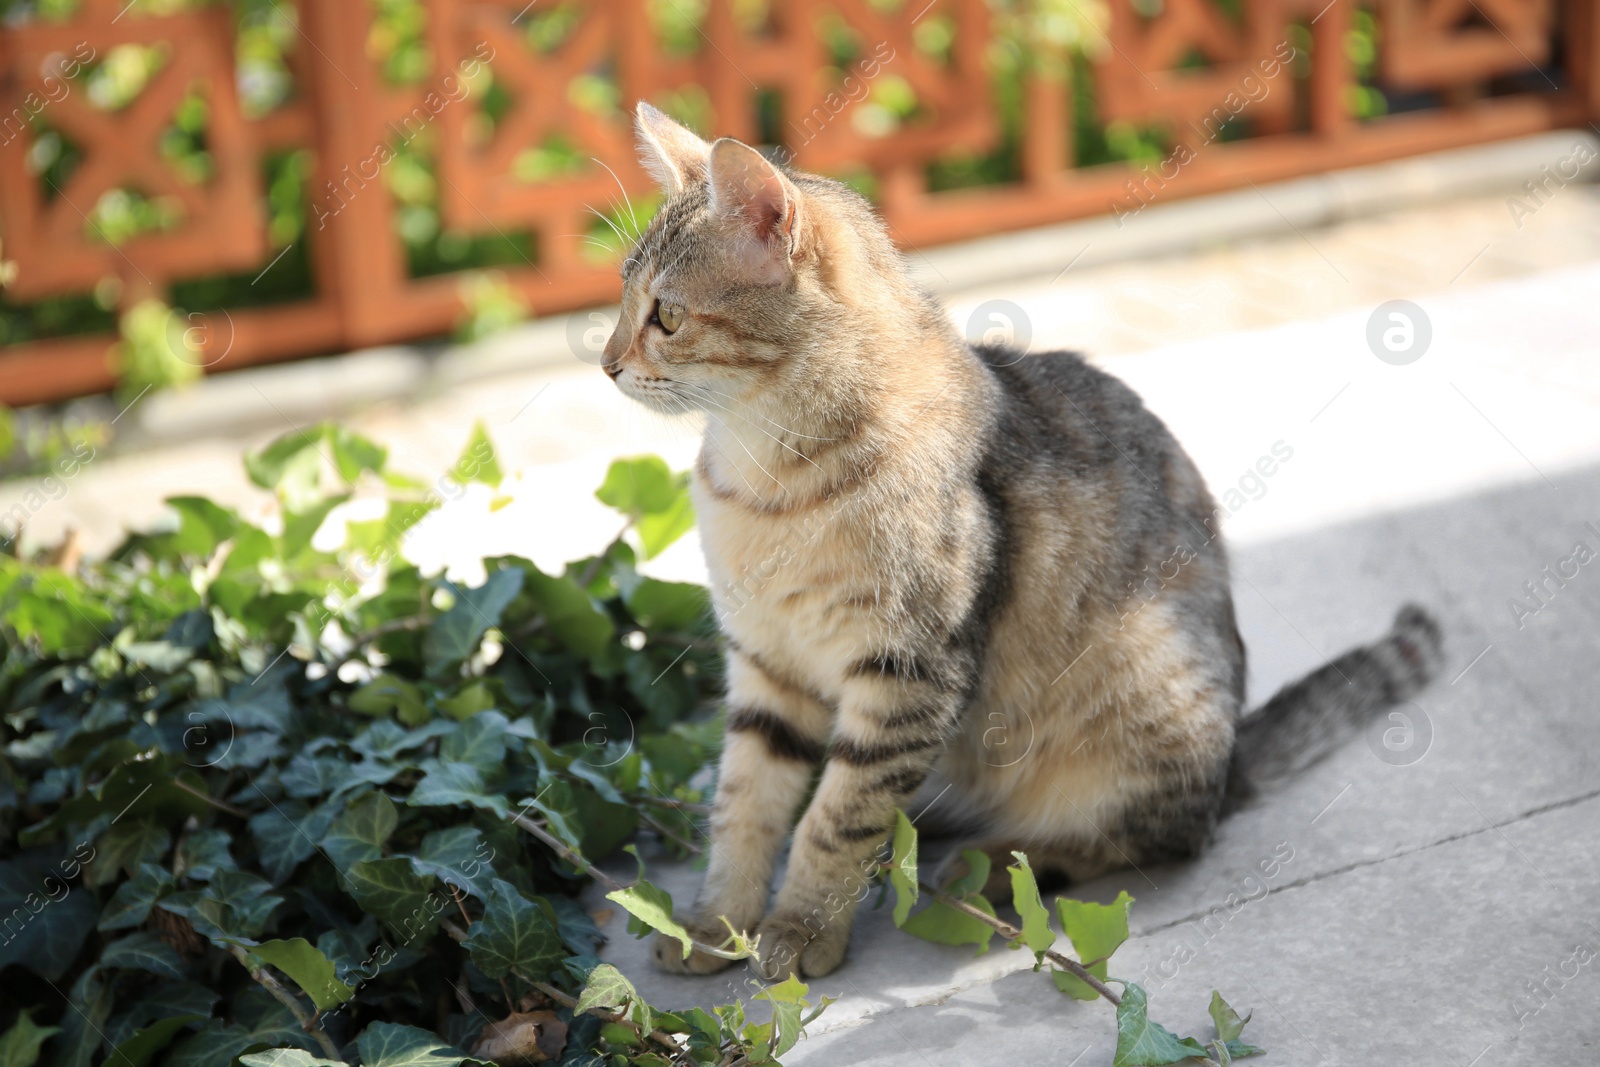 Photo of Lonely stray cat near green plant on city street. Homeless pet